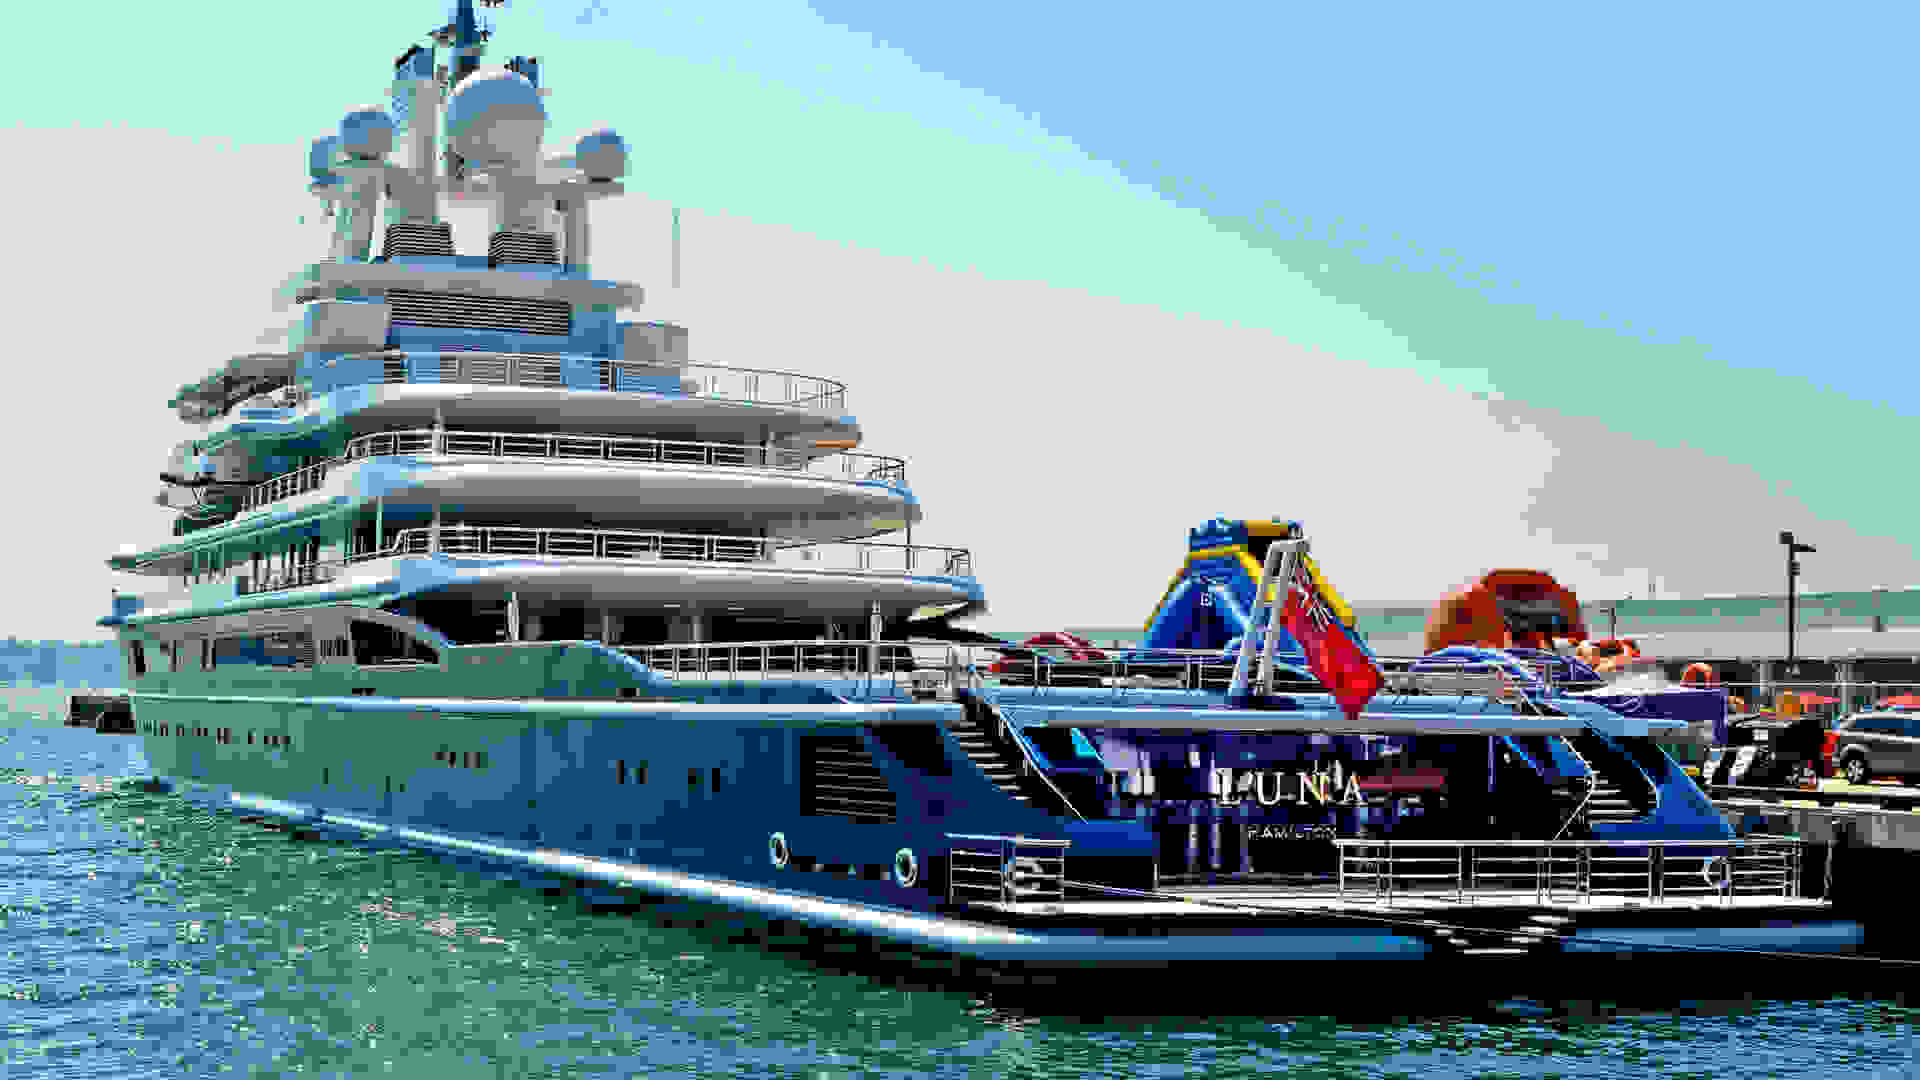 Roman Abramovich’s motor yacht “Luna” docked in San Diego, January 2013 | Photo by Sam Morris via Wikipedia (CC-BY-3.0)